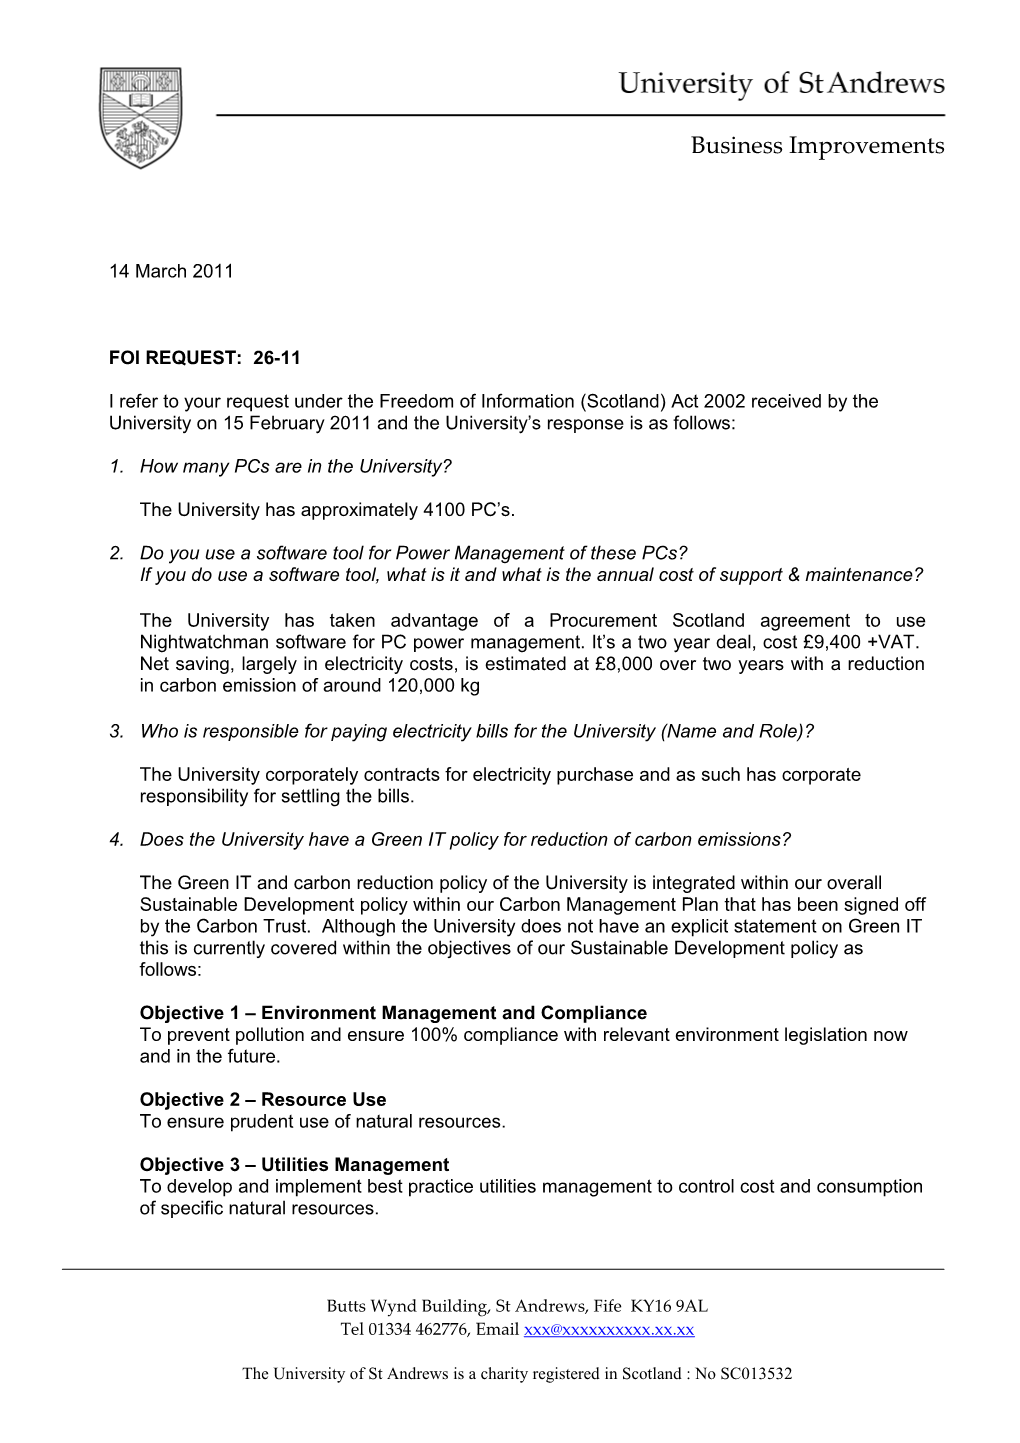 Request Under the Environmental Information (Scotland) Regulations 2004